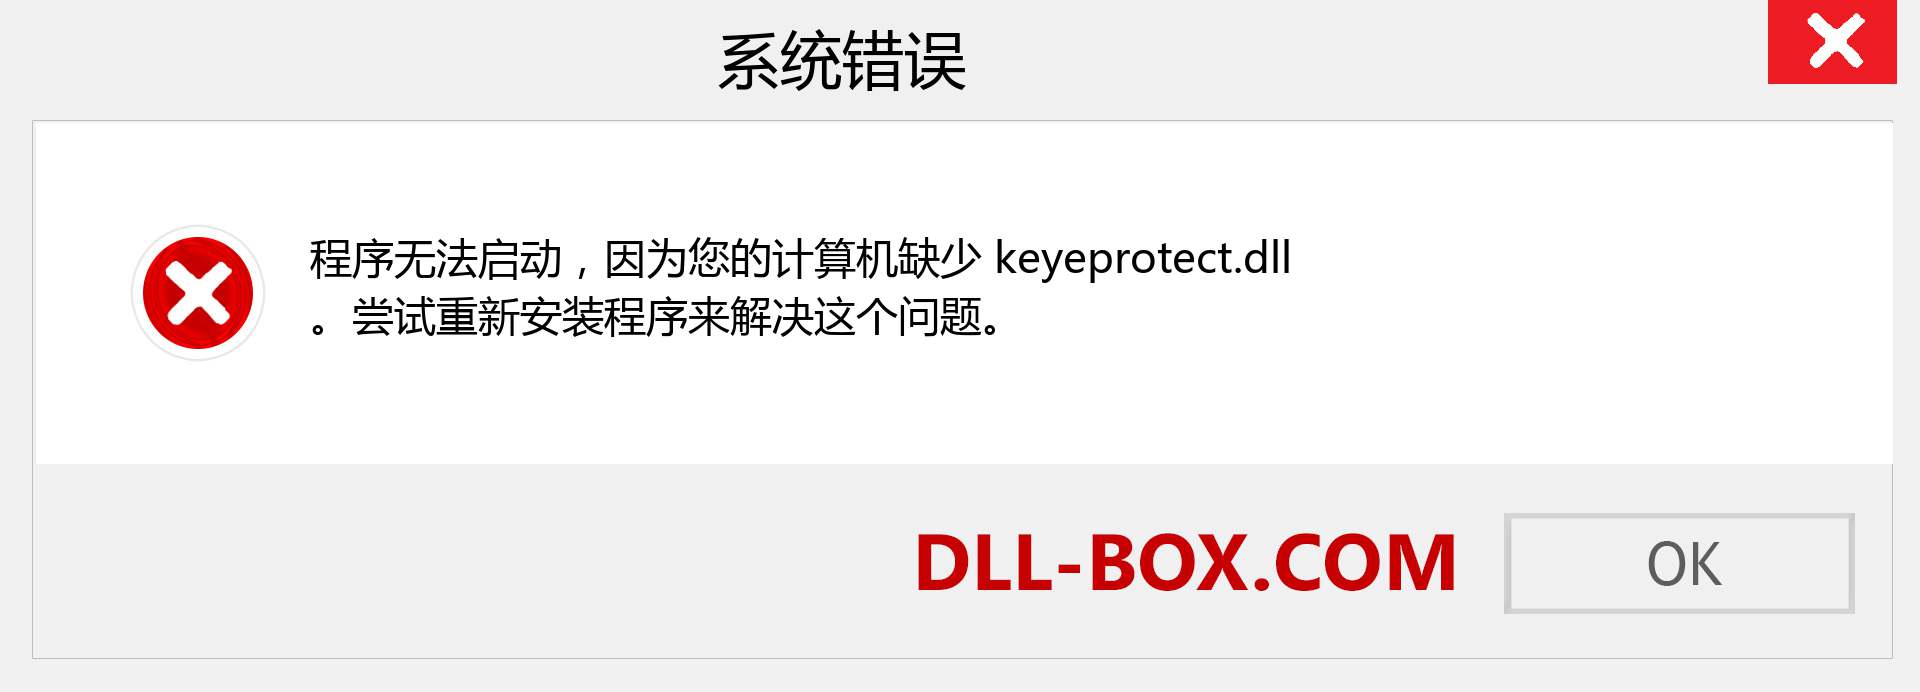 keyeprotect.dll 文件丢失？。 适用于 Windows 7、8、10 的下载 - 修复 Windows、照片、图像上的 keyeprotect dll 丢失错误